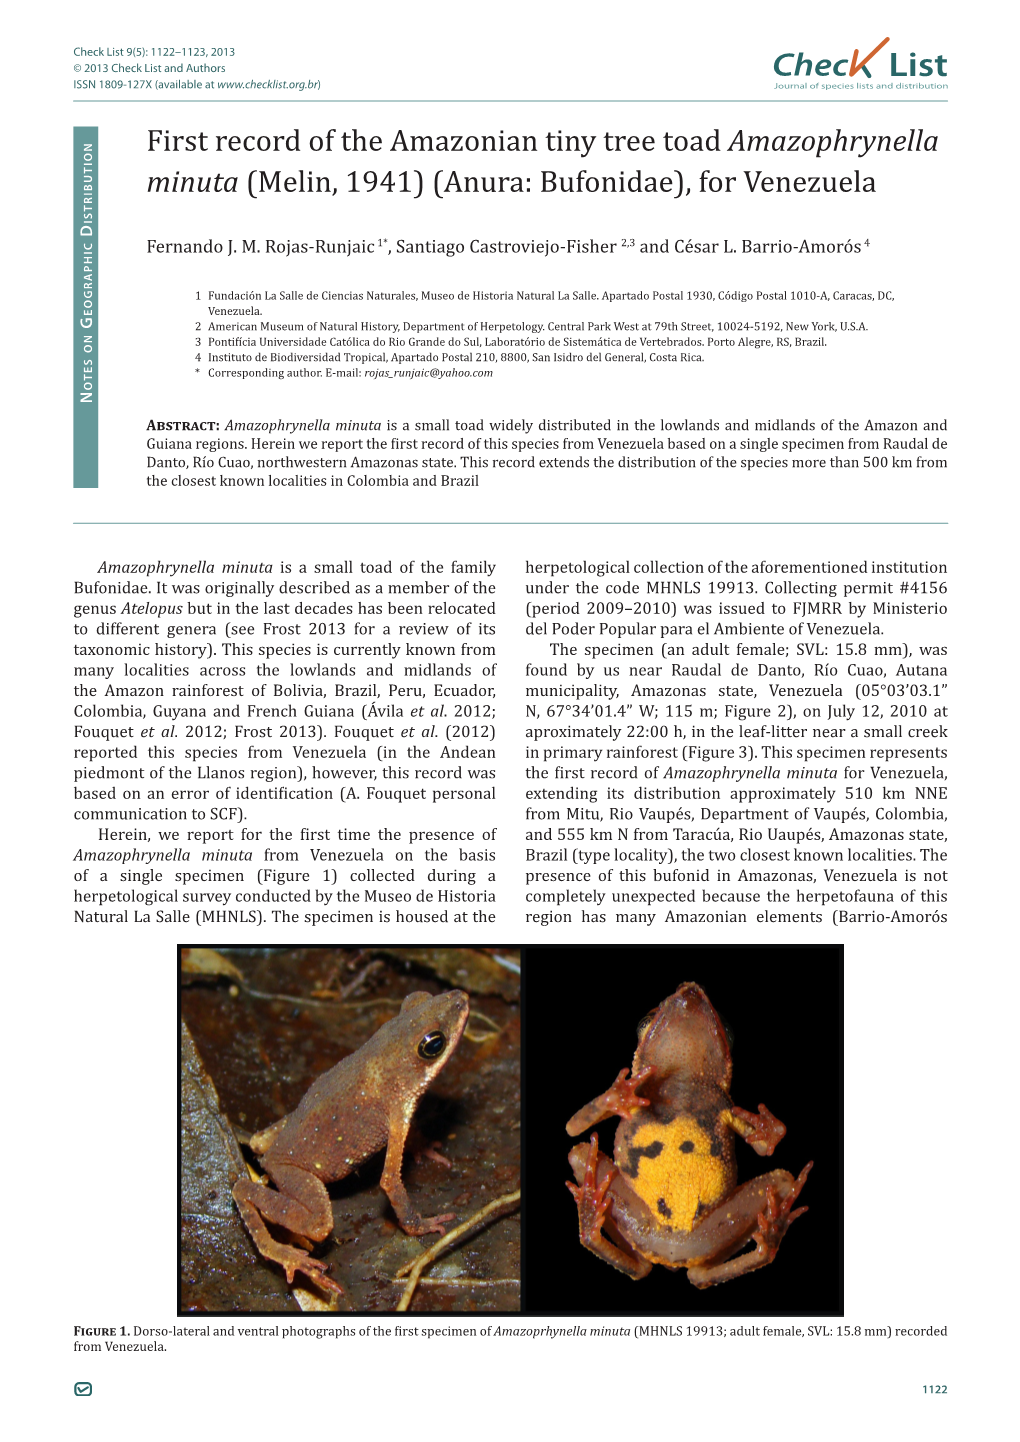 First Record of the Amazonian Tiny Tree Toad Amazophrynella Minuta (Melin, 1941) (Anura: Bufonidae), for Venezuela Istributio